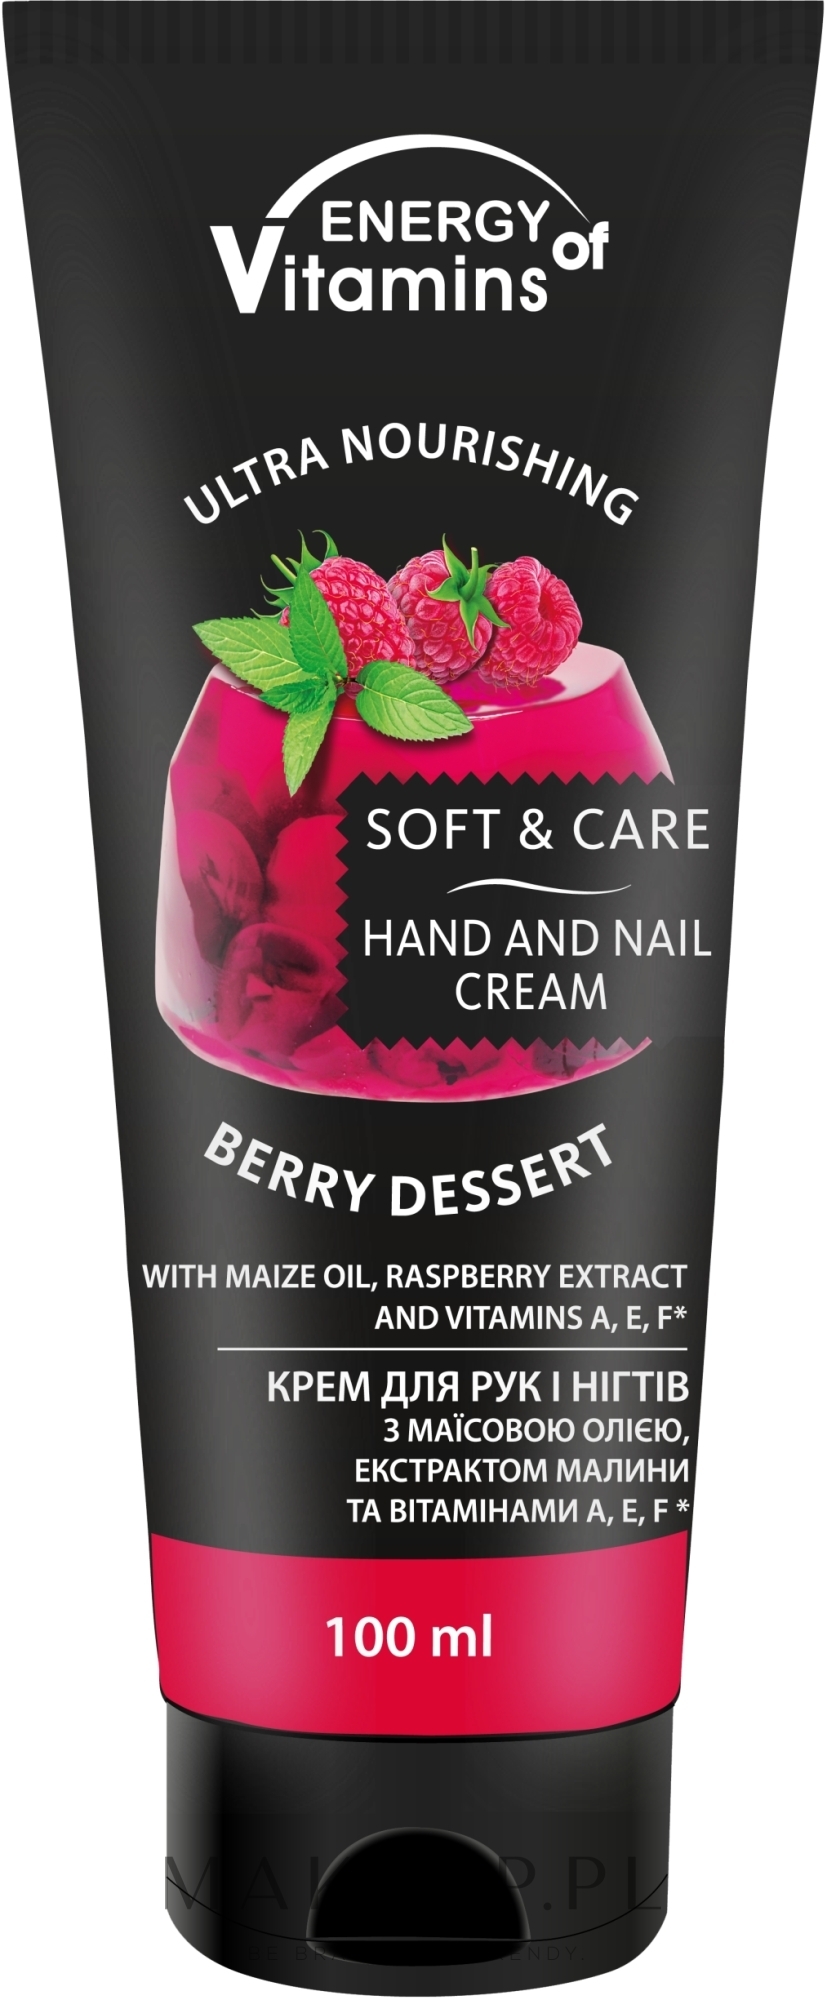 Nawilżający krem do rąk i paznokci - Energy of Vitamins Soft & Care Berry Dessert Cream For Hands And Nails — Zdjęcie 100 ml